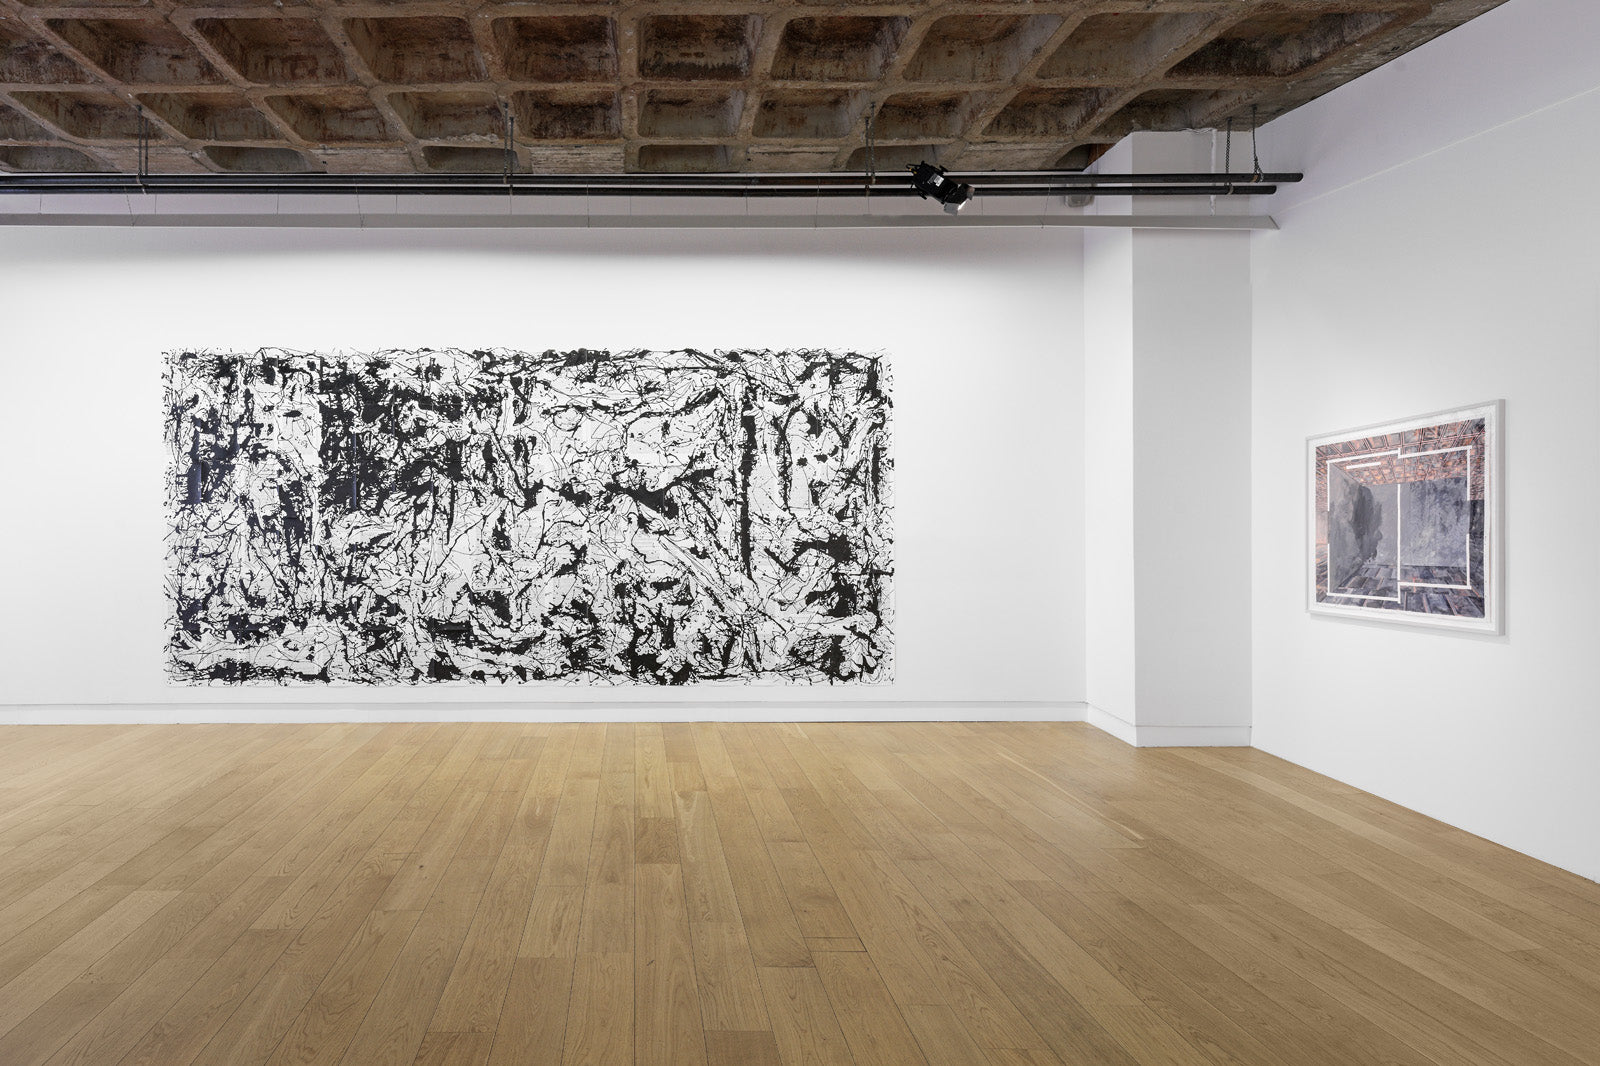 Art & Language, Devinera qui pourra (Figure it out who can), Installation view, 2019, Galerie Michael Janssen Berlin